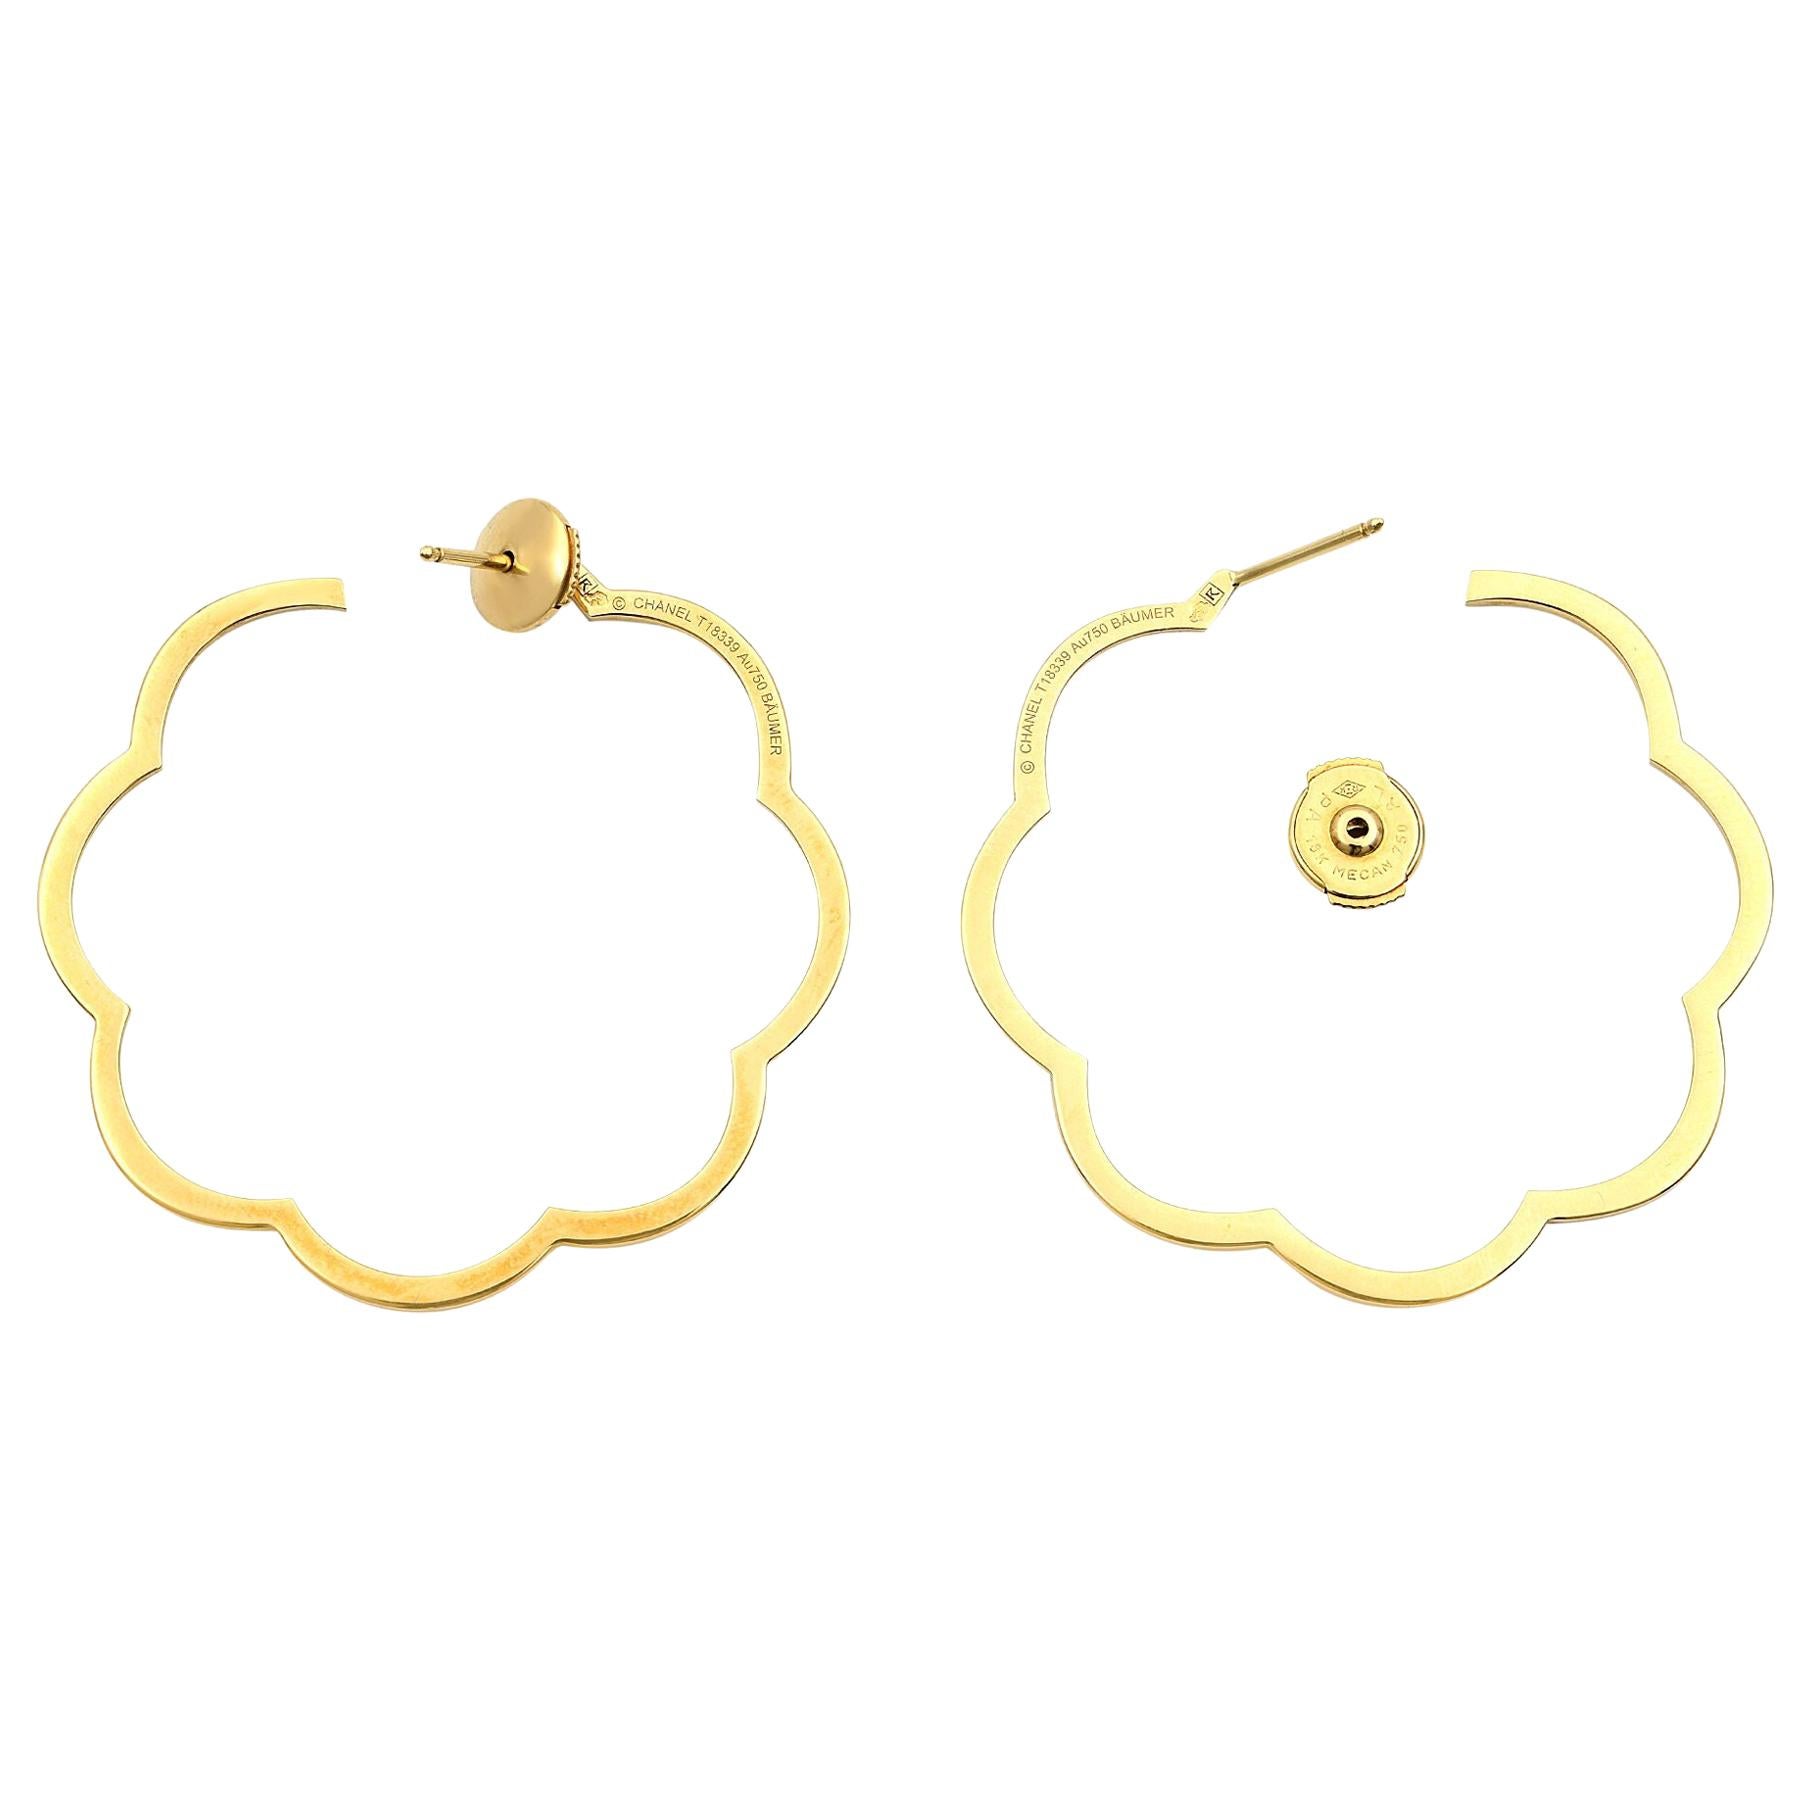 Chanel Signature Camellia Flower Drop Earrings in 18 Karat Yellow